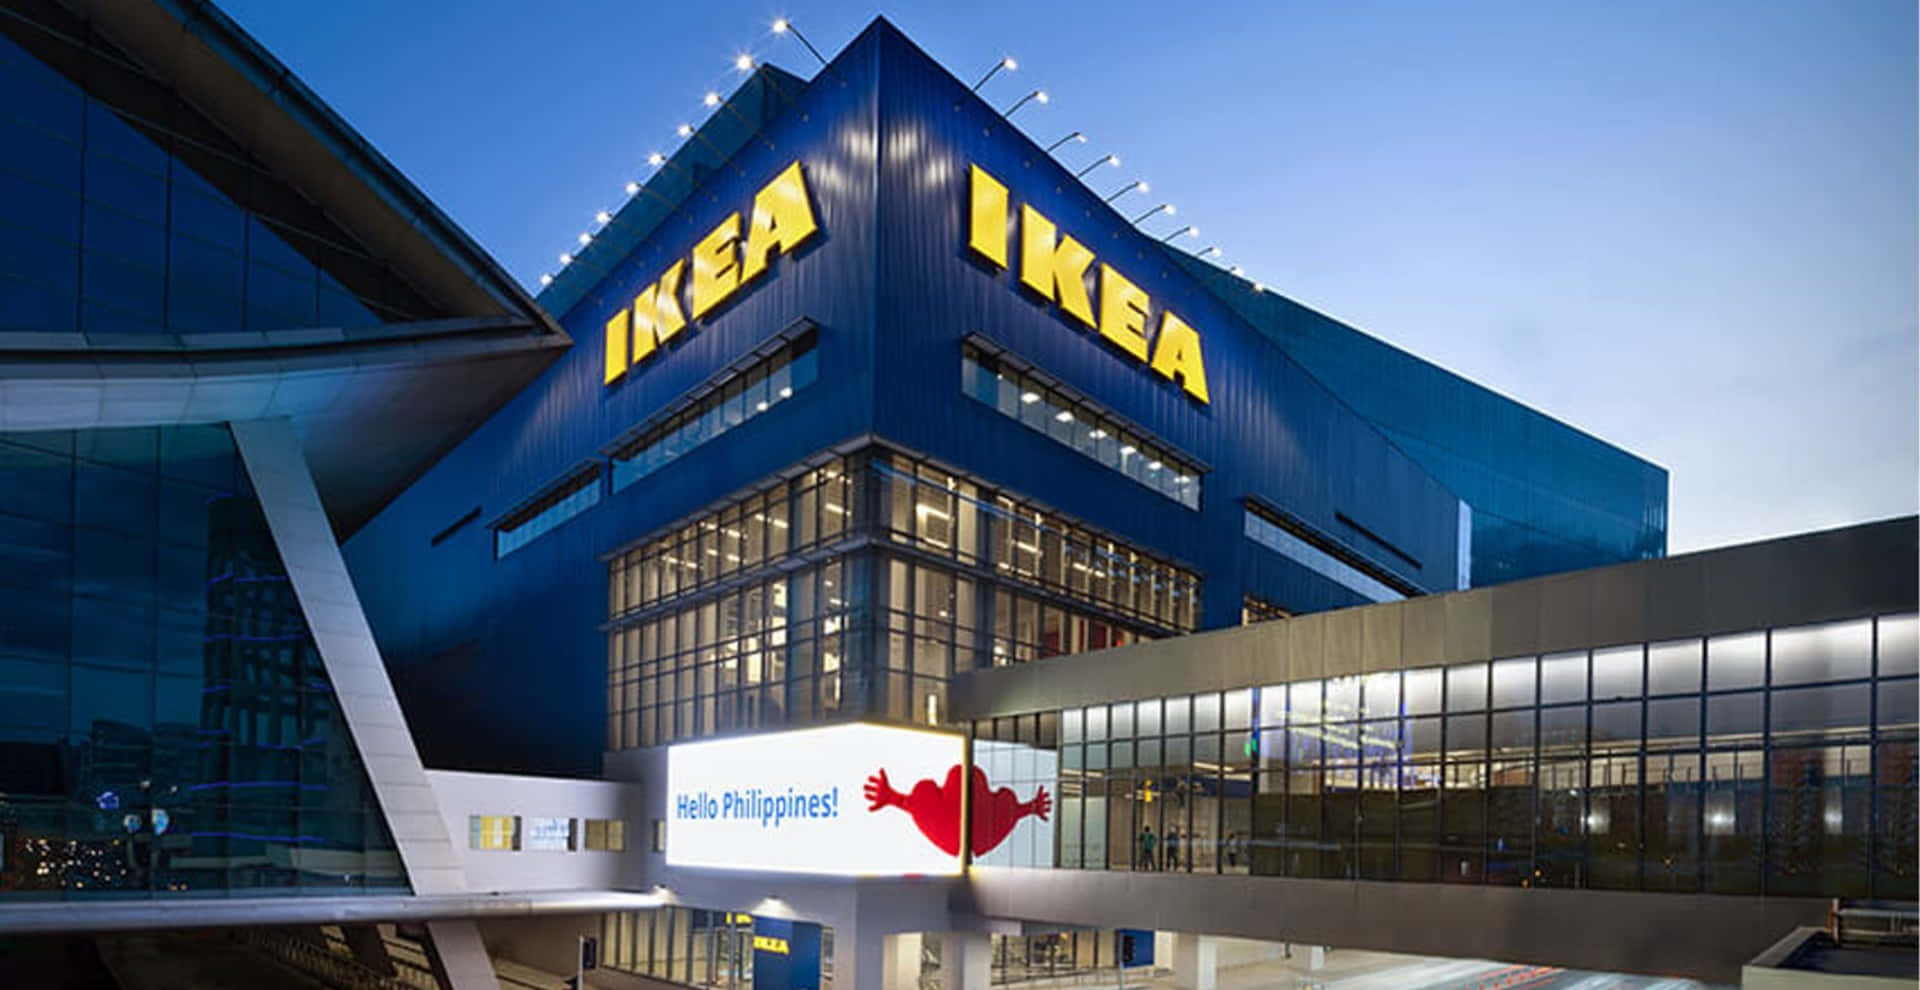 Ikeasnya Huvudkontor I Kanada I Montreal.